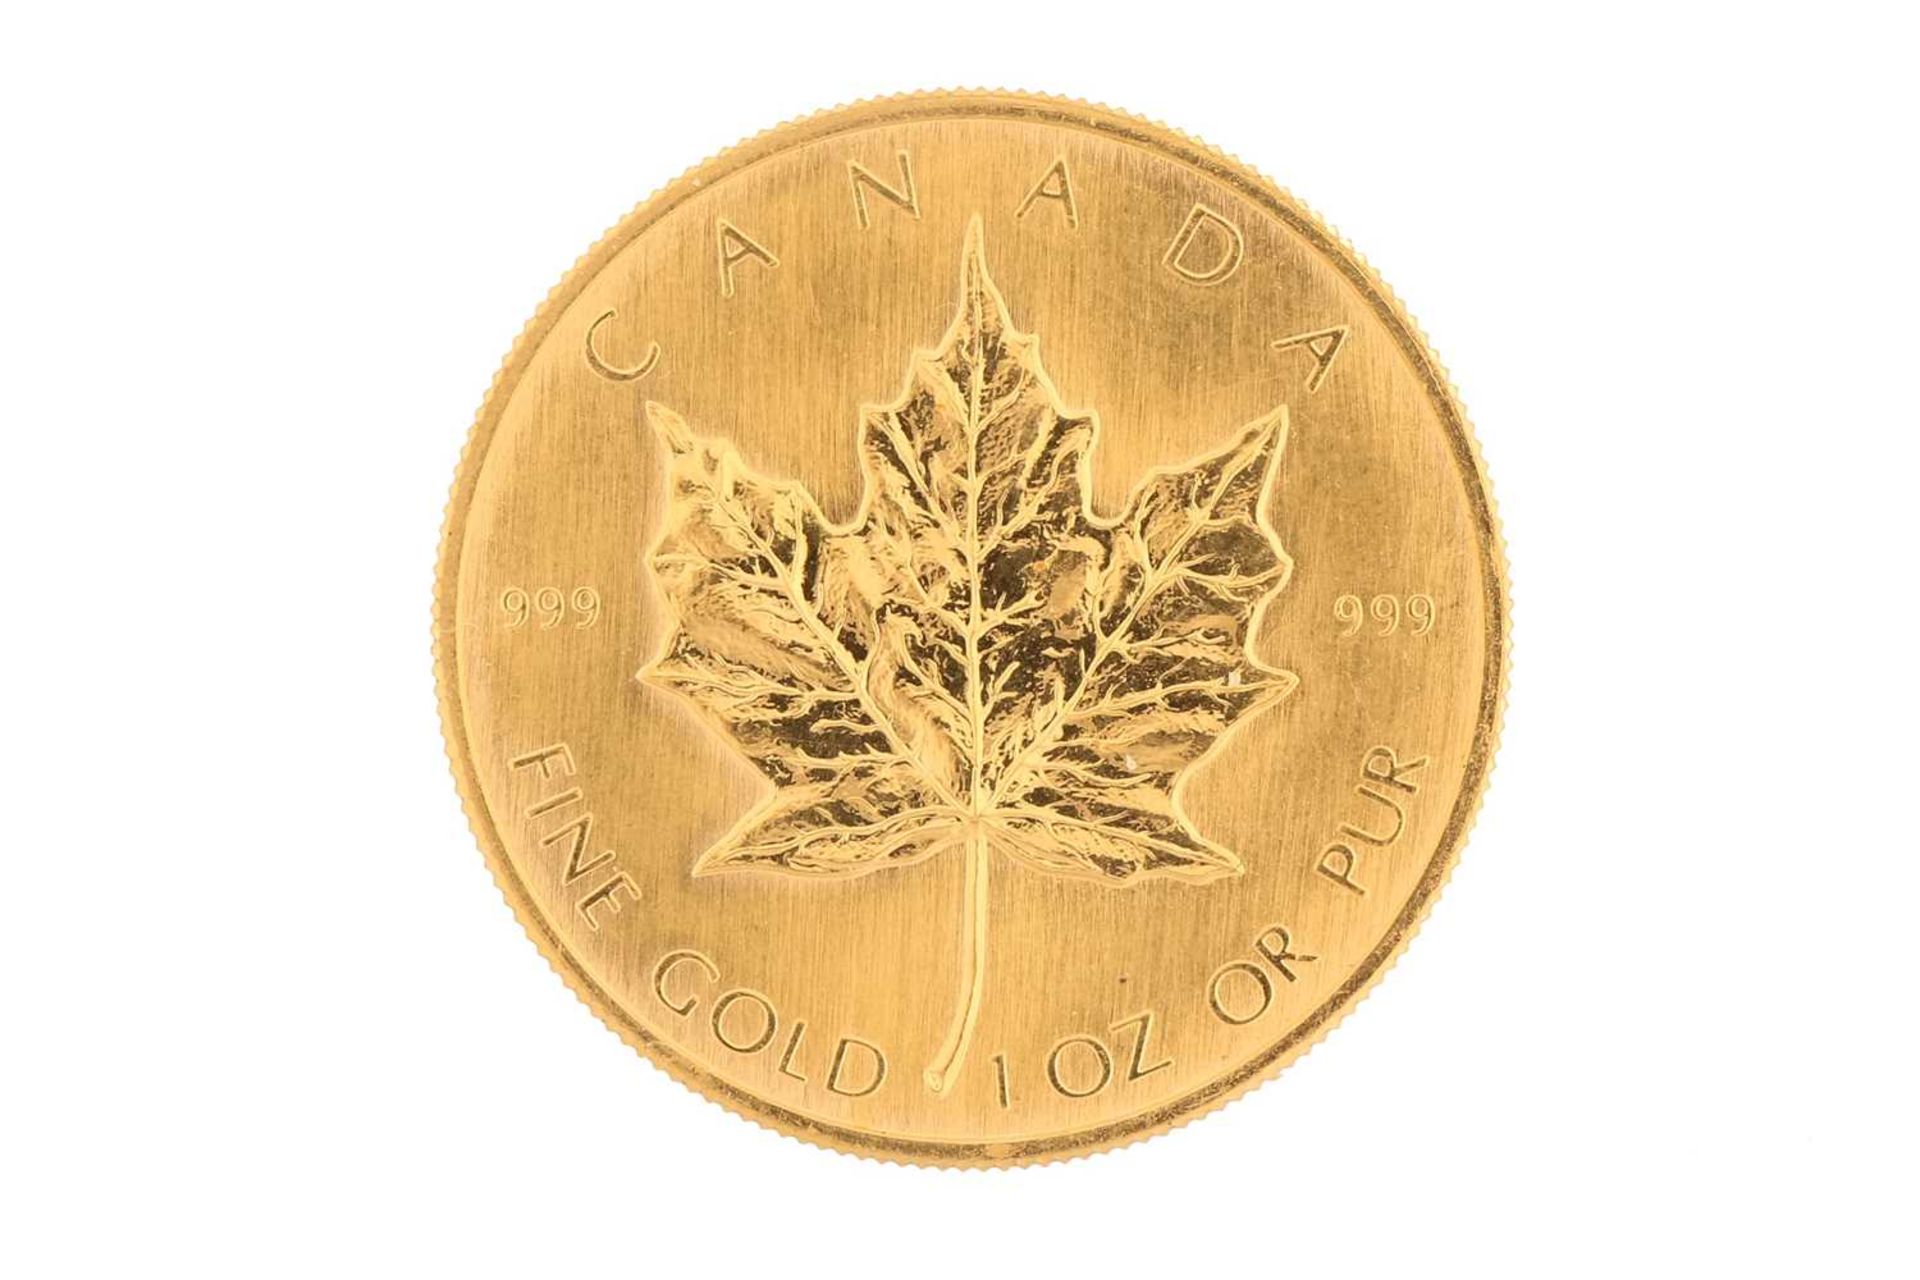 Canada - Elizabeth II, gold Maple leaf 50 dollars, 1981, 1oz fine gold - Image 3 of 3